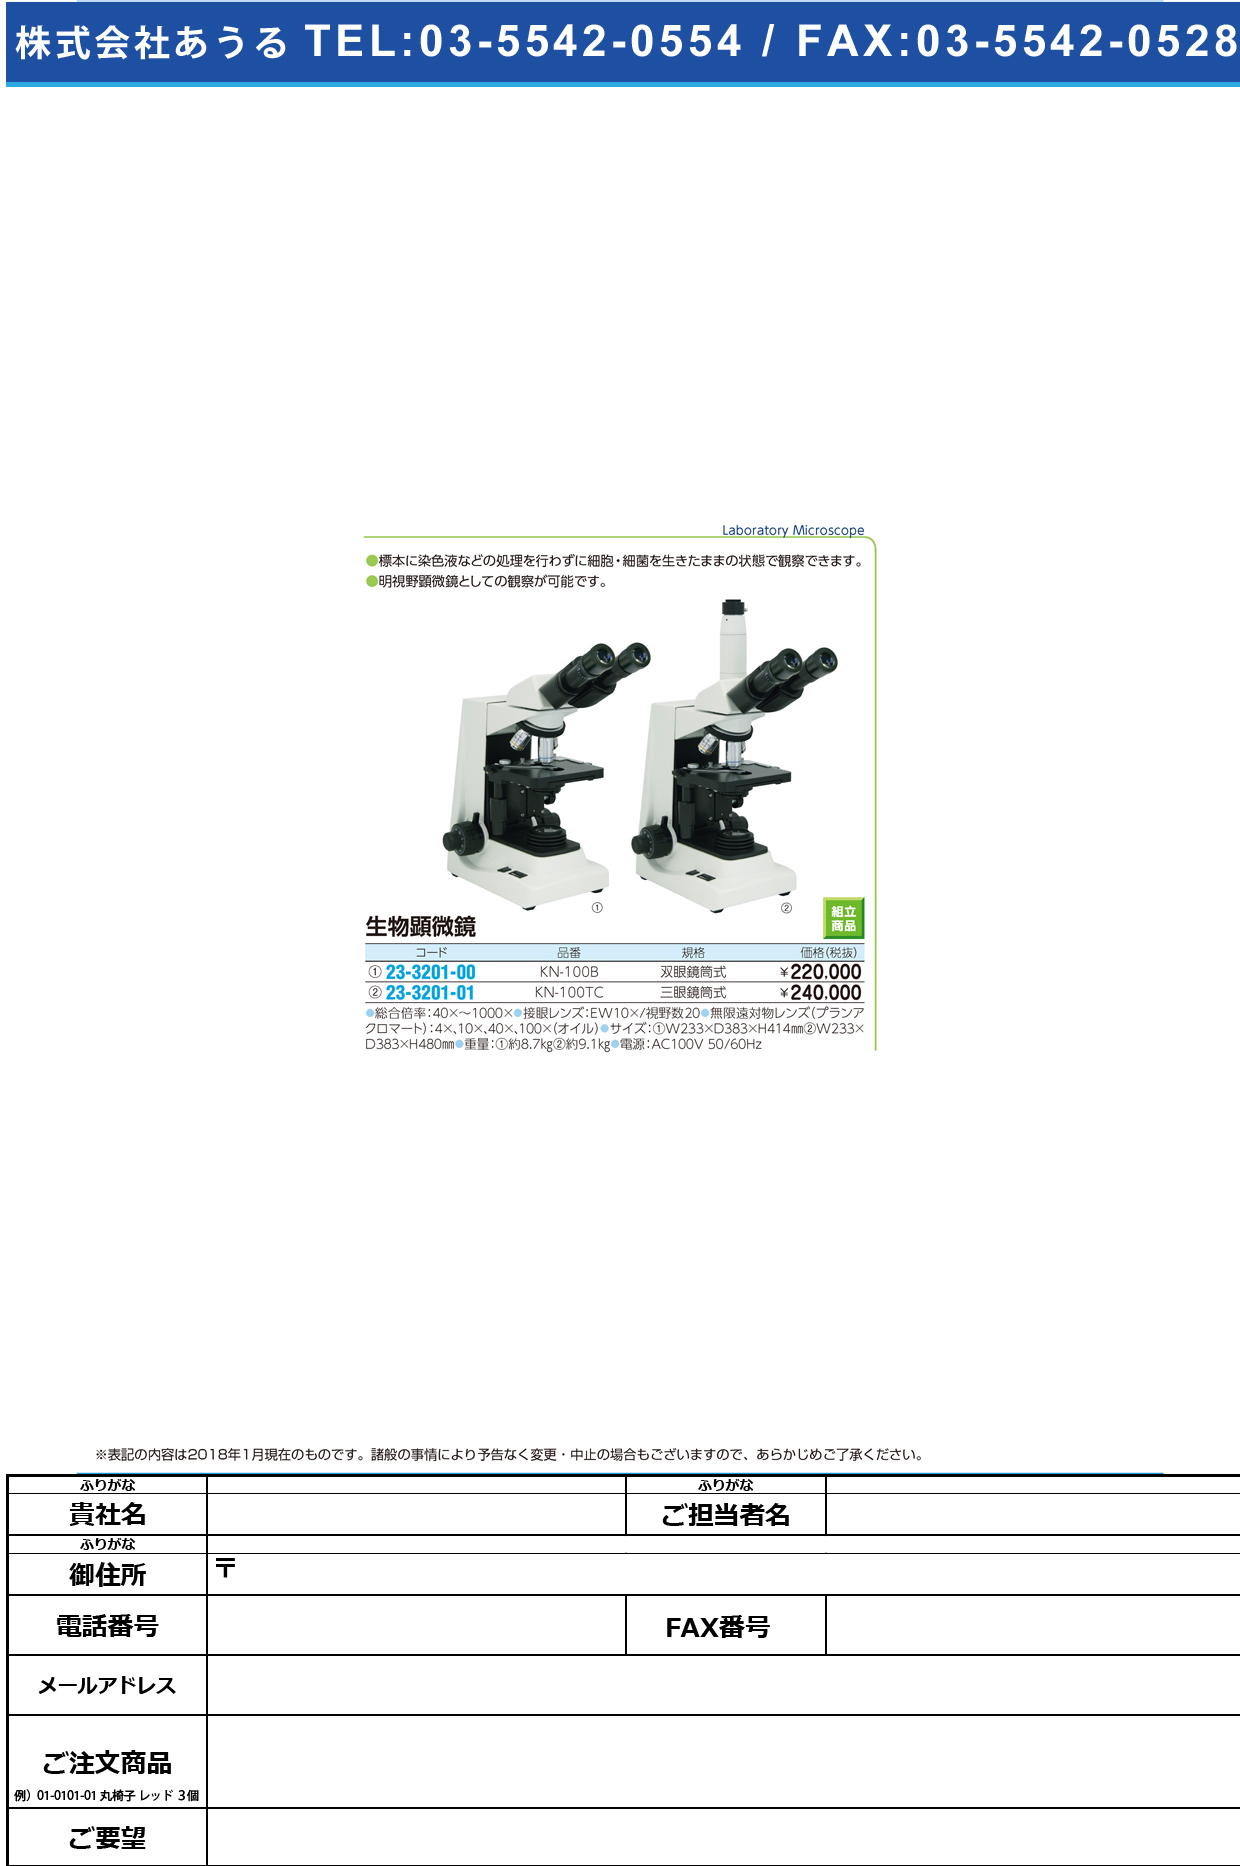 (23-3201-00)生物顕微鏡ラボラックス（双眼鏡筒式 KN-100B ｾｲﾌﾞﾂｹﾝﾋﾞｷｮｳﾗﾎﾞﾗｯｸｽ【1台単位】【2018年カタログ商品】